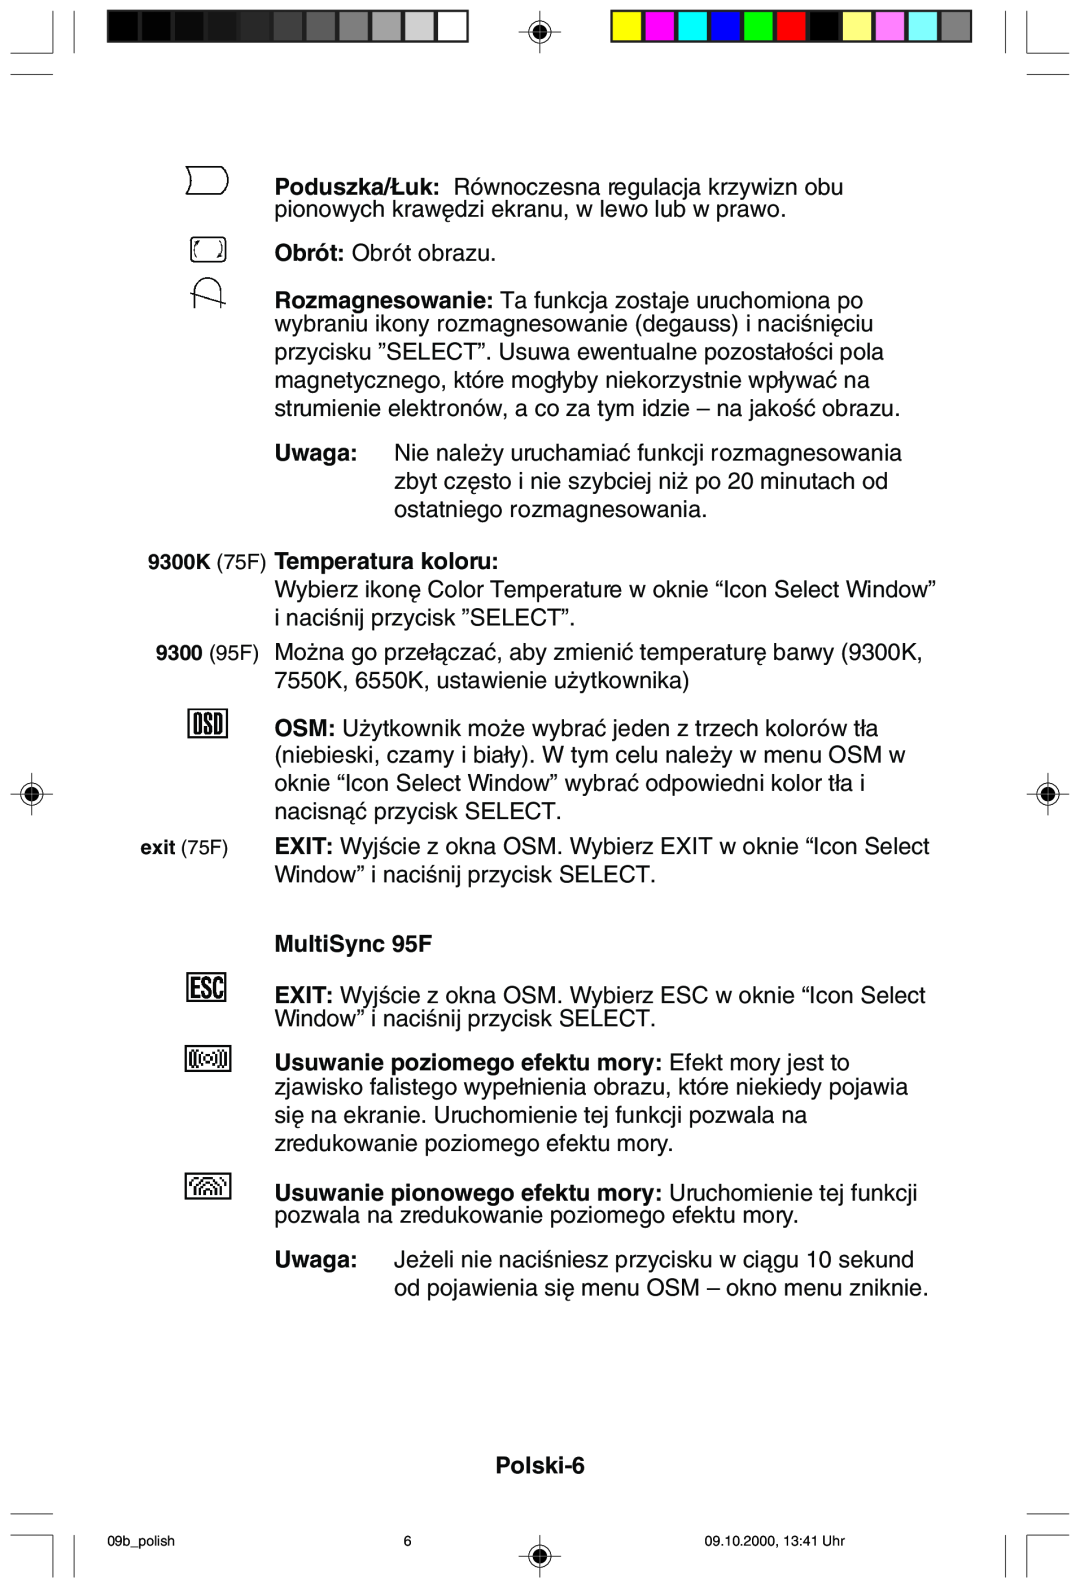 NEC user manual Obrót Obrót obrazu, 9300K 75F Temperatura koloru, MultiSync 95F, Polski-6 